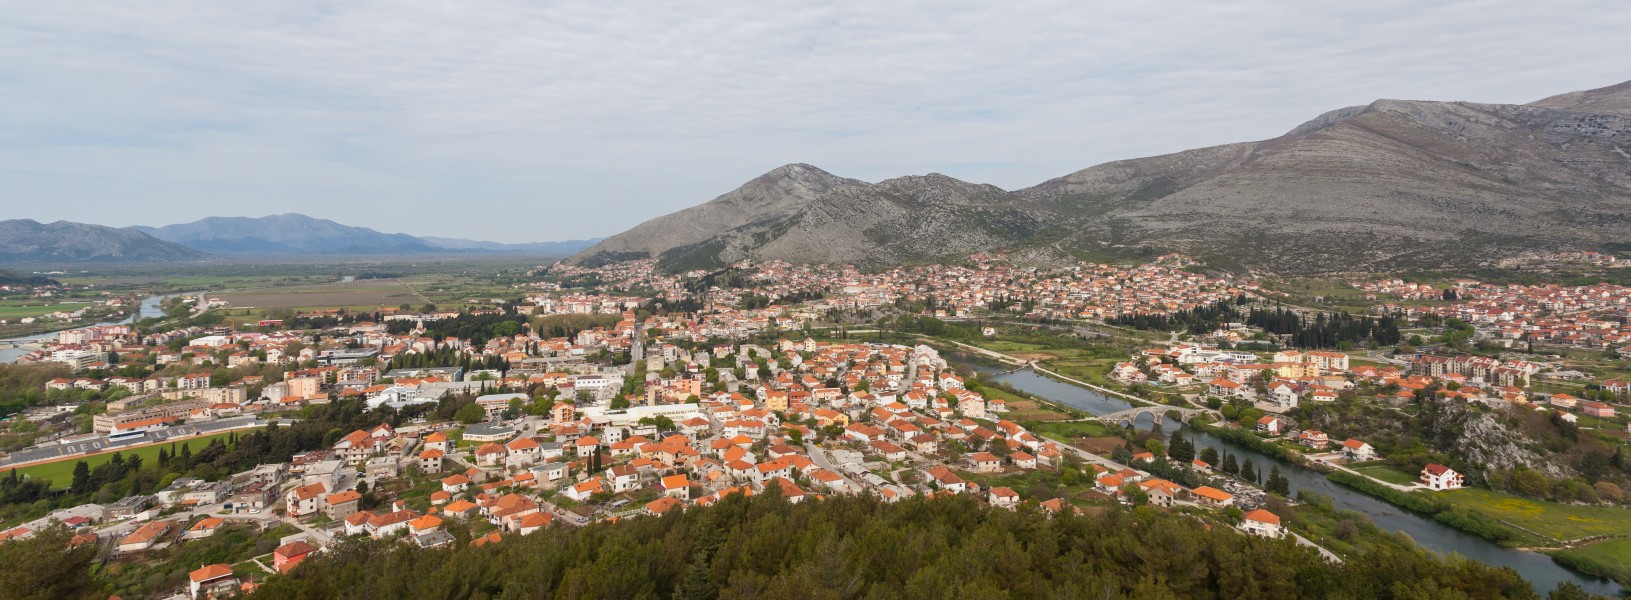 Trebinje, Bosnia y Herzegovina, 2014-04-14, DD 06